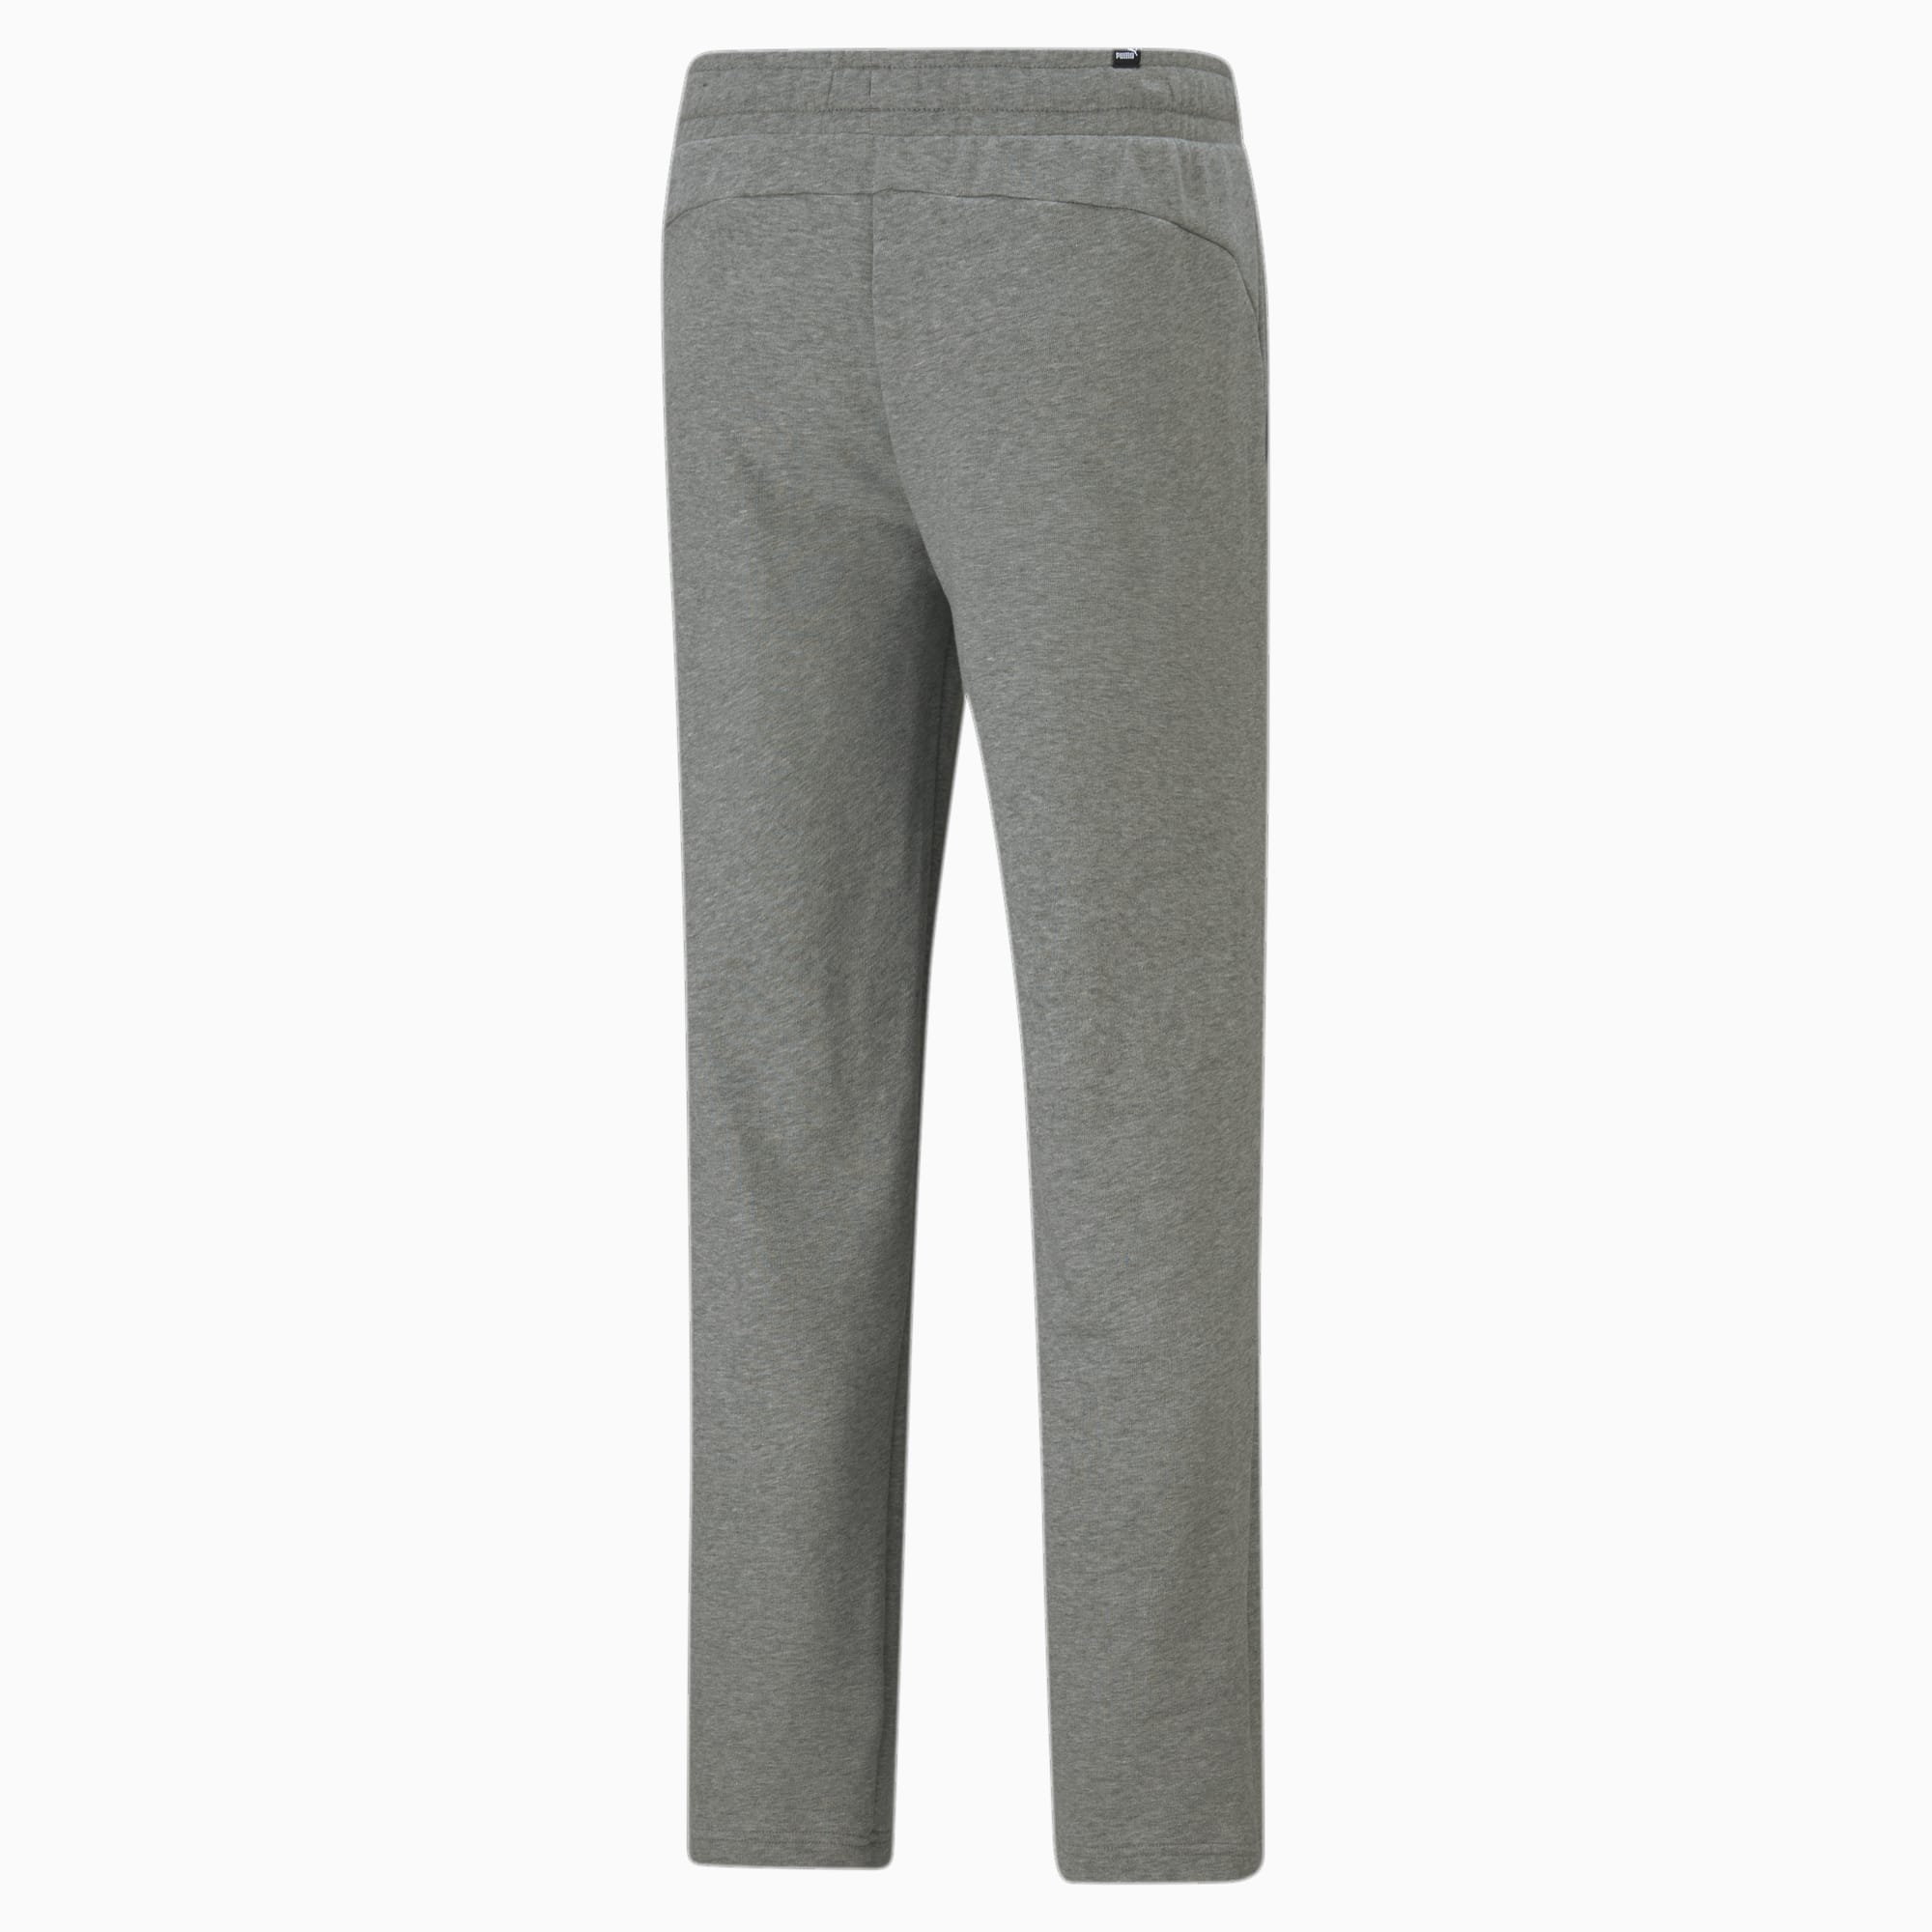 PUMA Essentials Logo Men's Sweatpants, Medium Grey Heather, Size L, Clothing